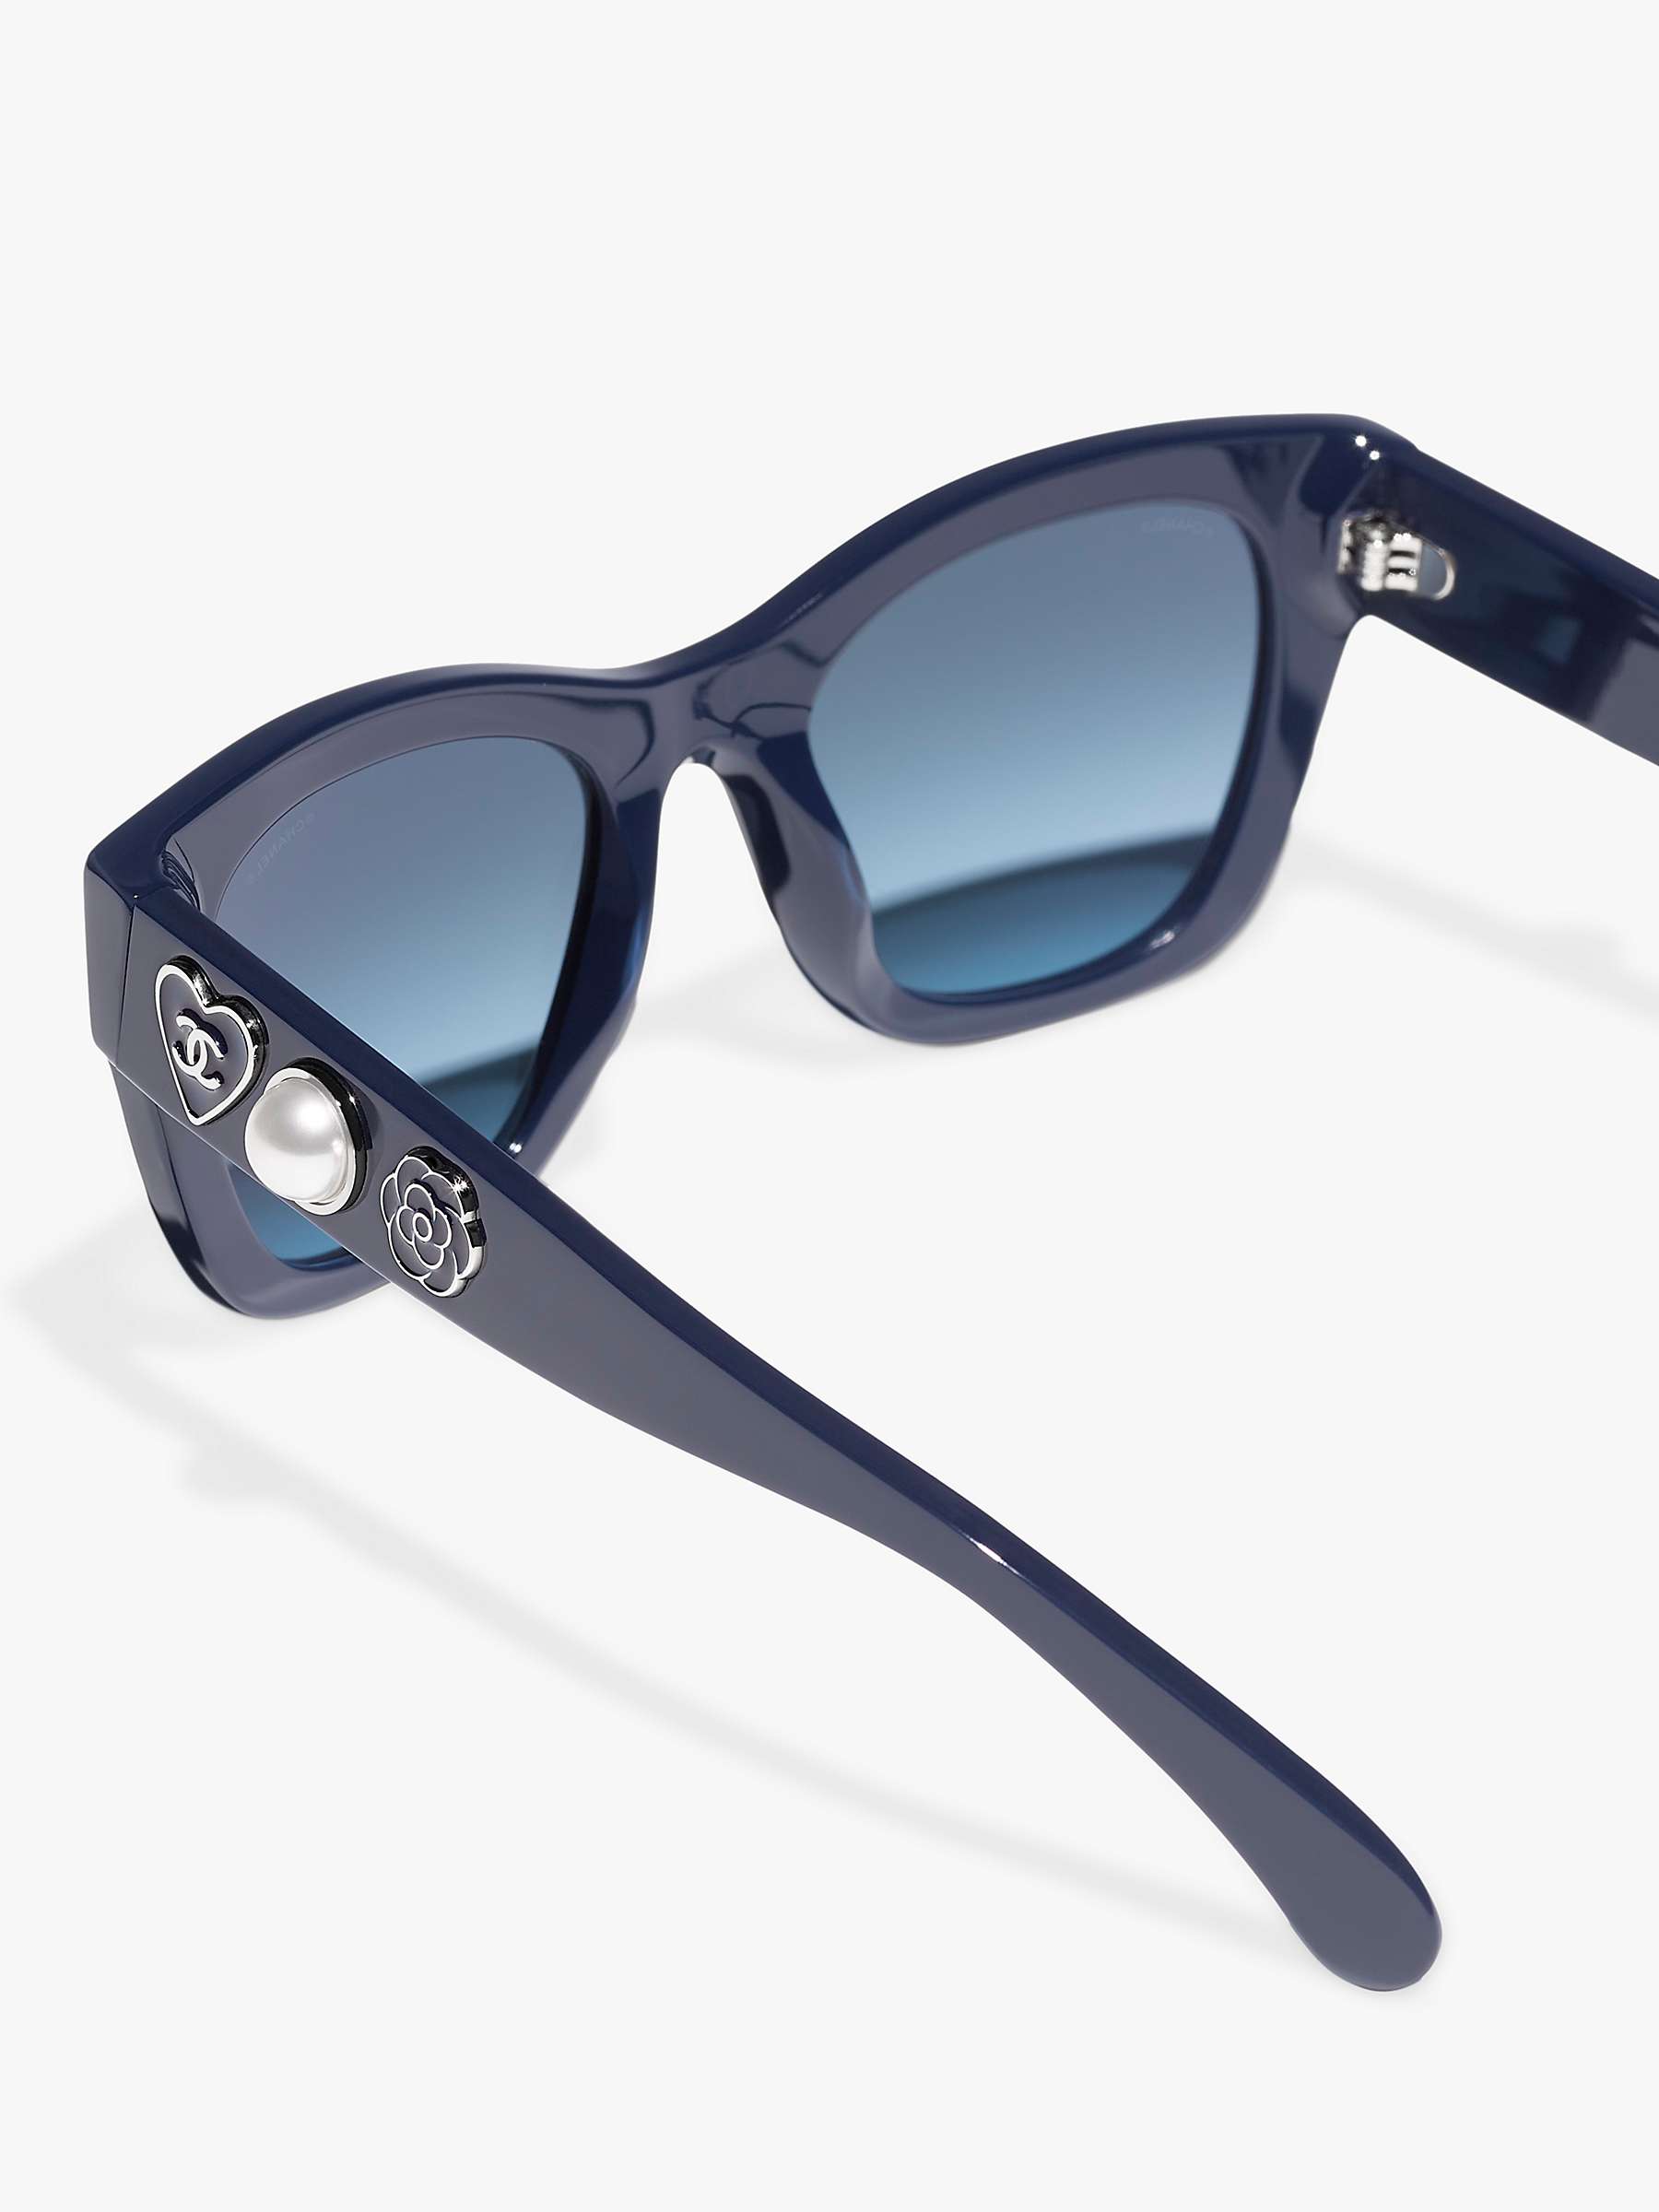 Buy CHANEL CH5478 Women's Irregular Sunglasses, Blue/Grey Online at johnlewis.com